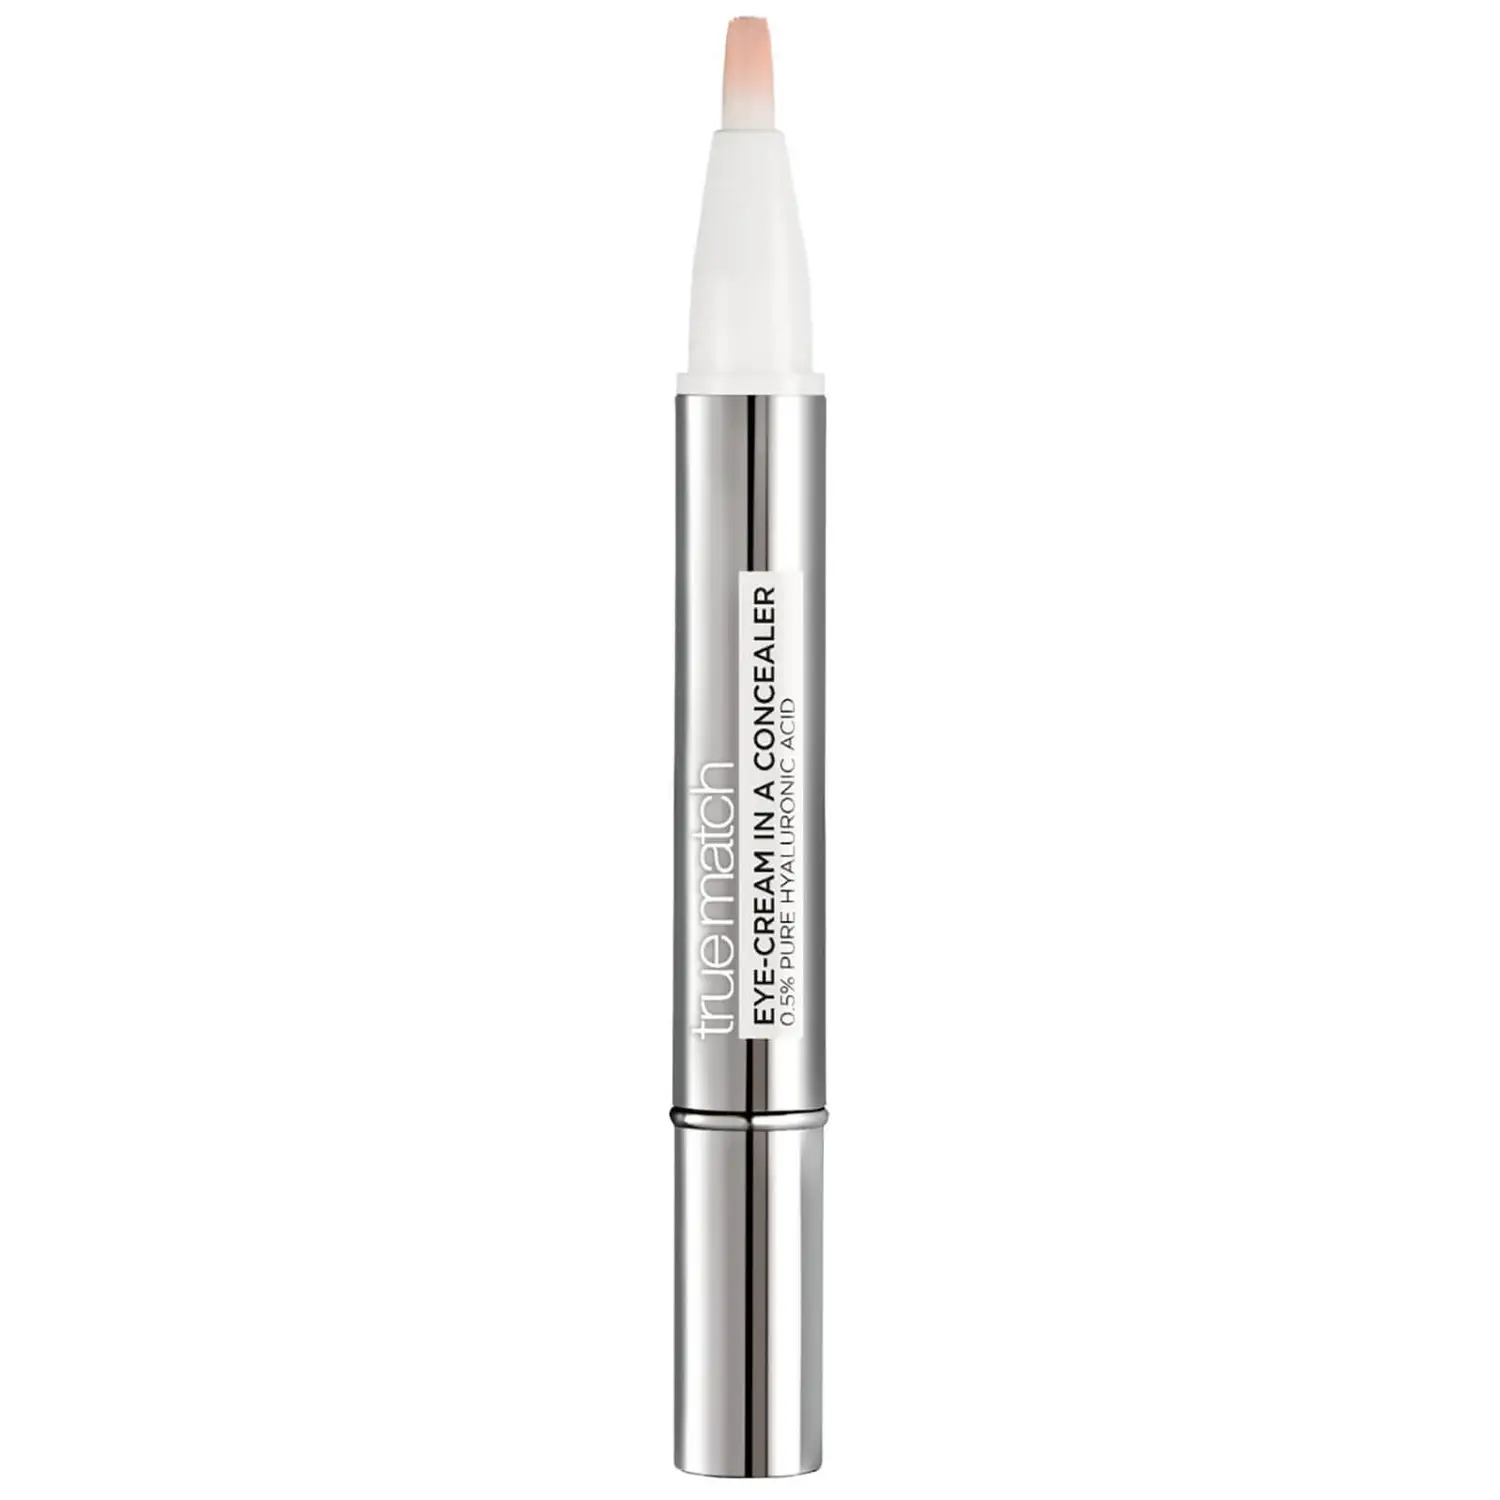 L'Oréal Paris True Match Eye Cream in a Concealer SPF20 £9.99